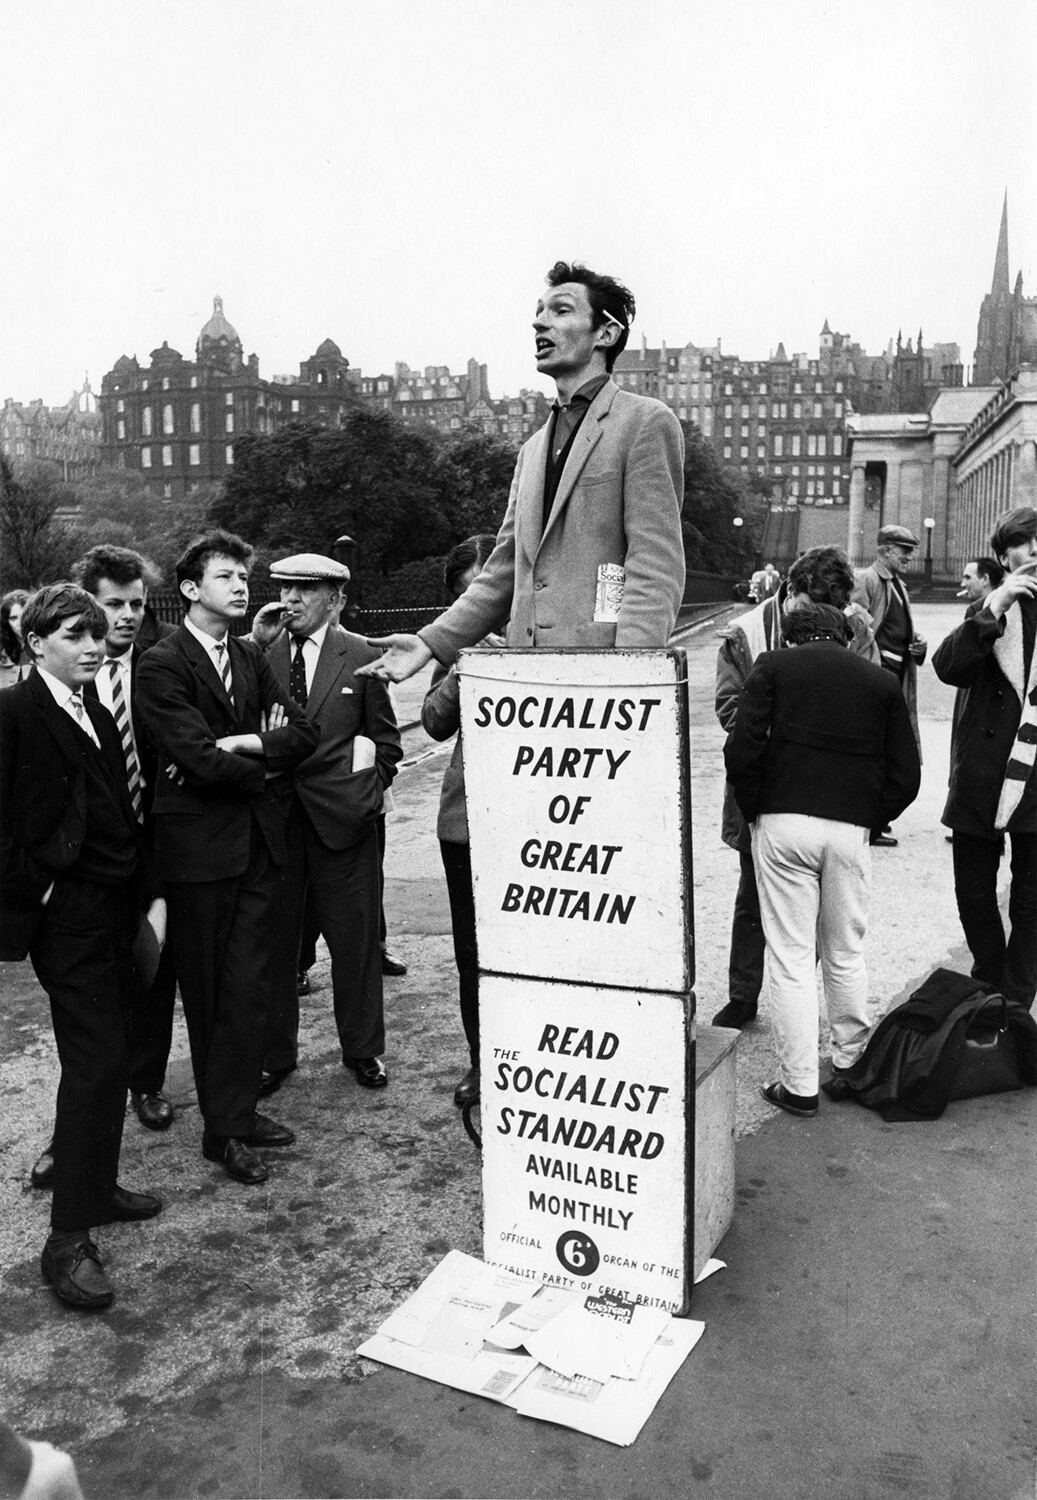 Оратор-социалист, Эдинбург, 1964. Фотограф Роберт Бломфилд